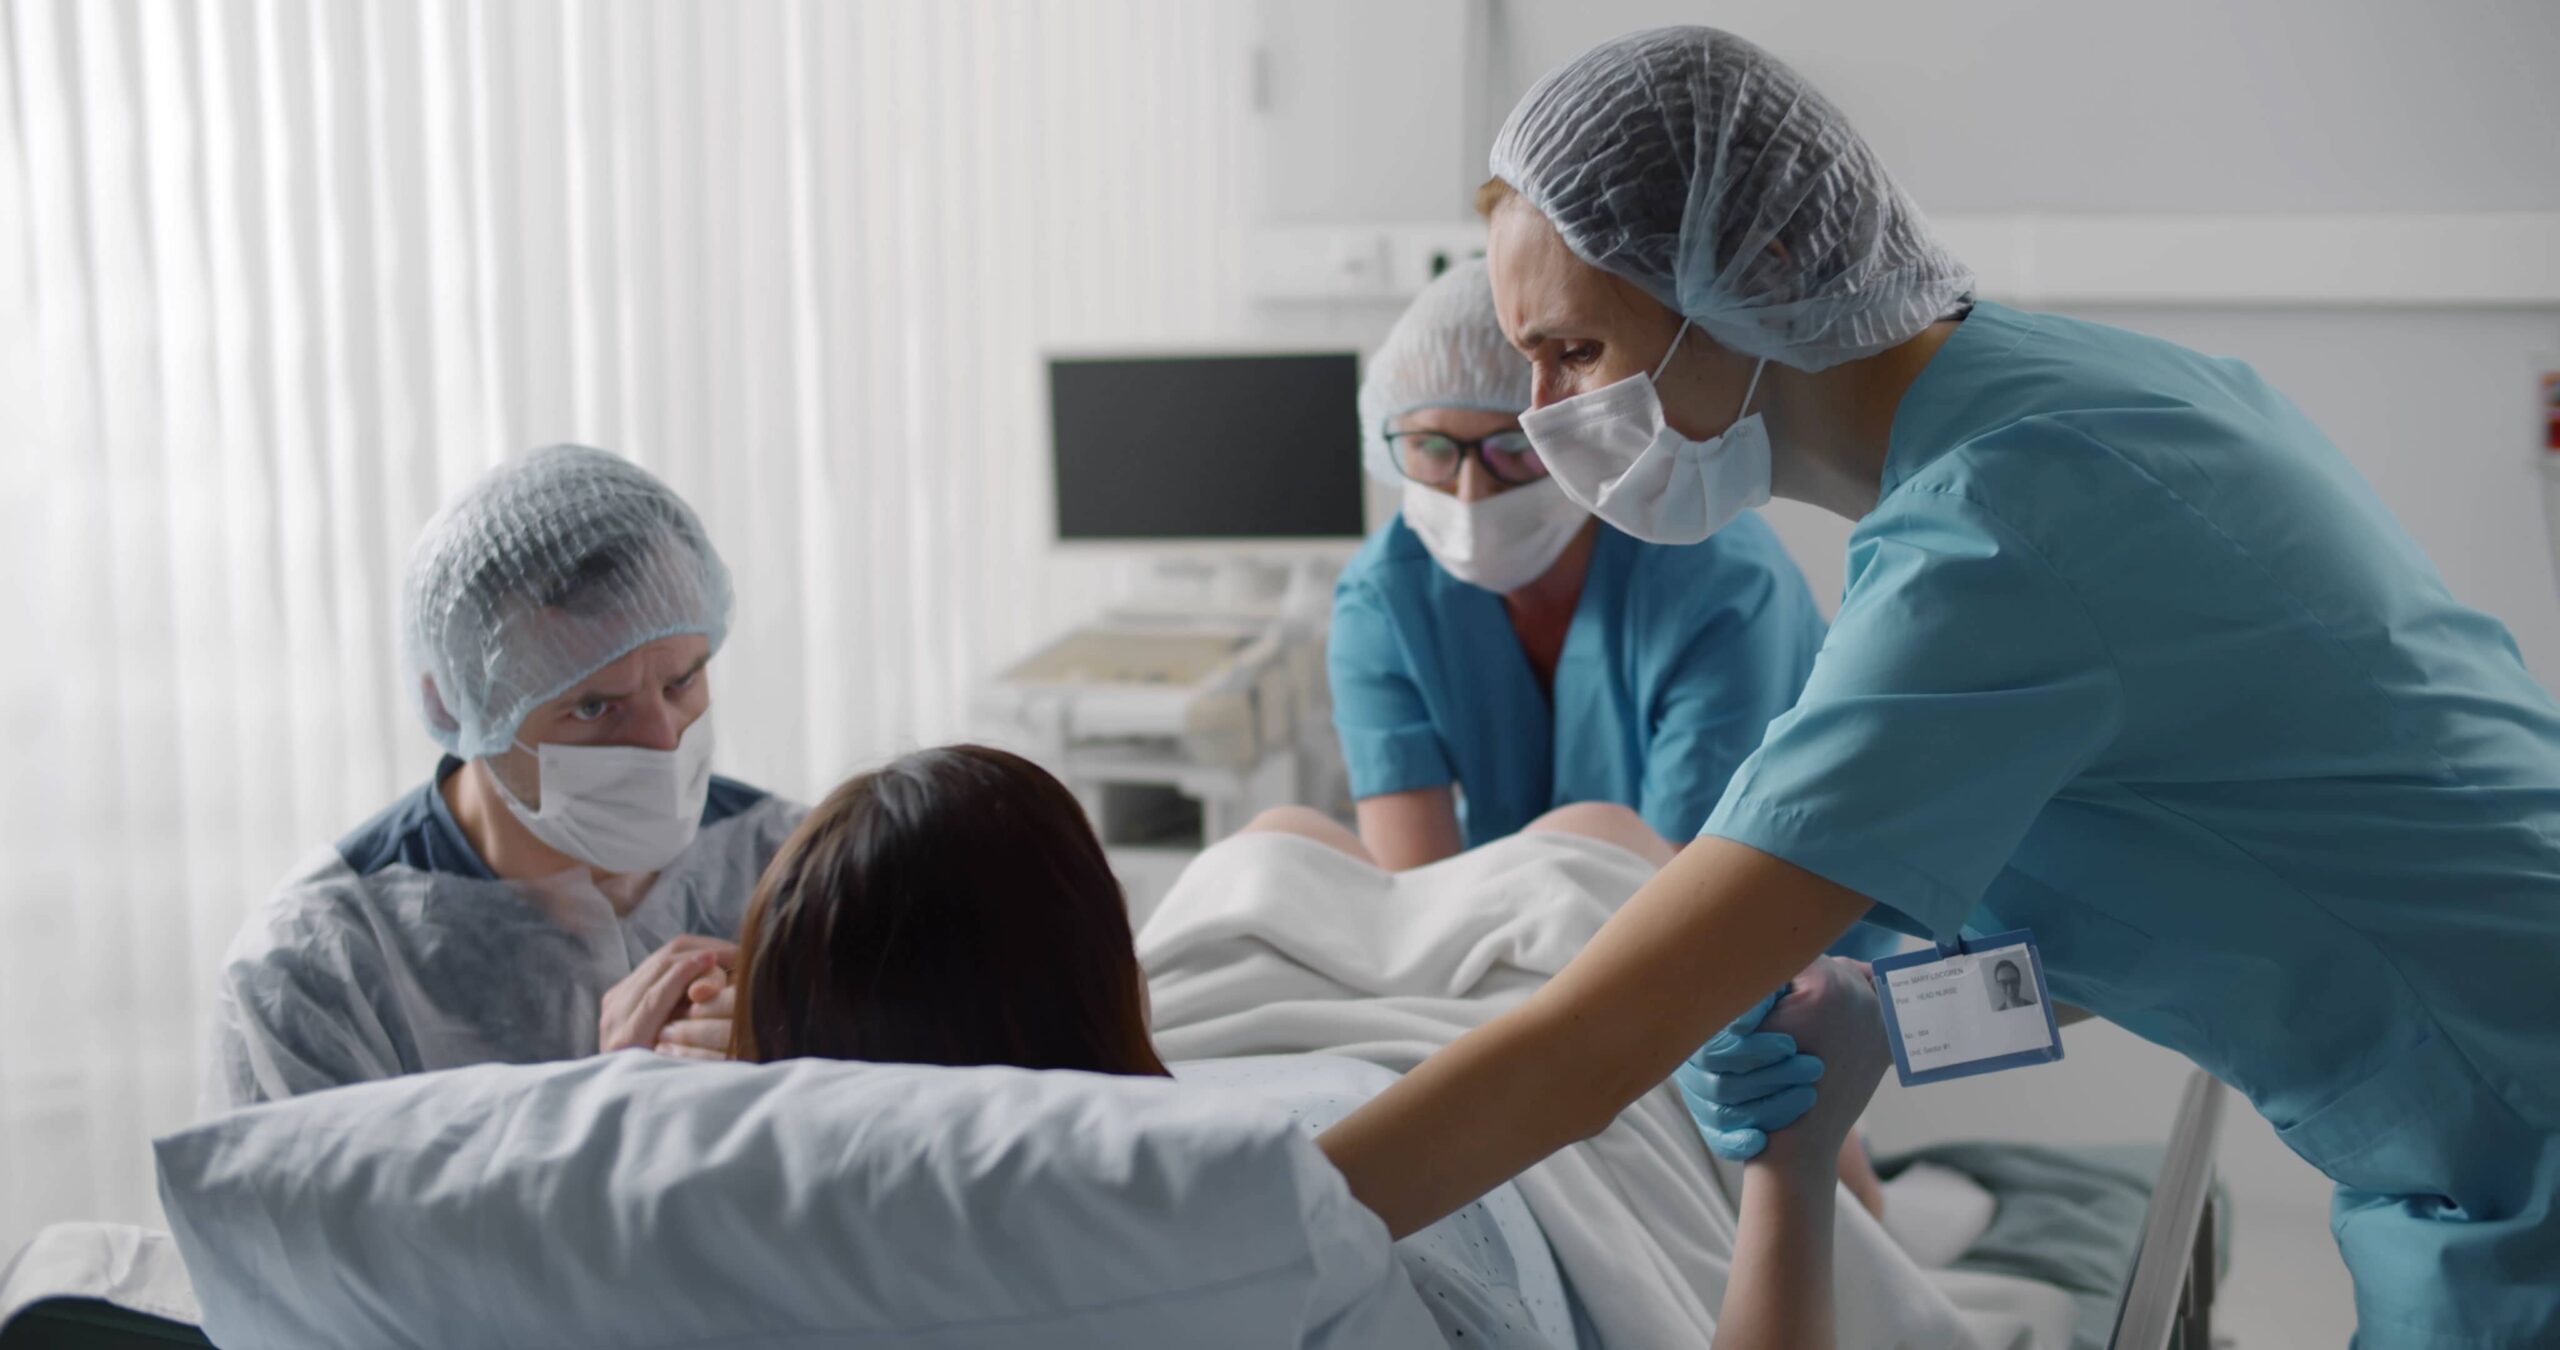 nurses surround a woman during childbirth | Mandell, Boisclair and Mandell, Ltd.